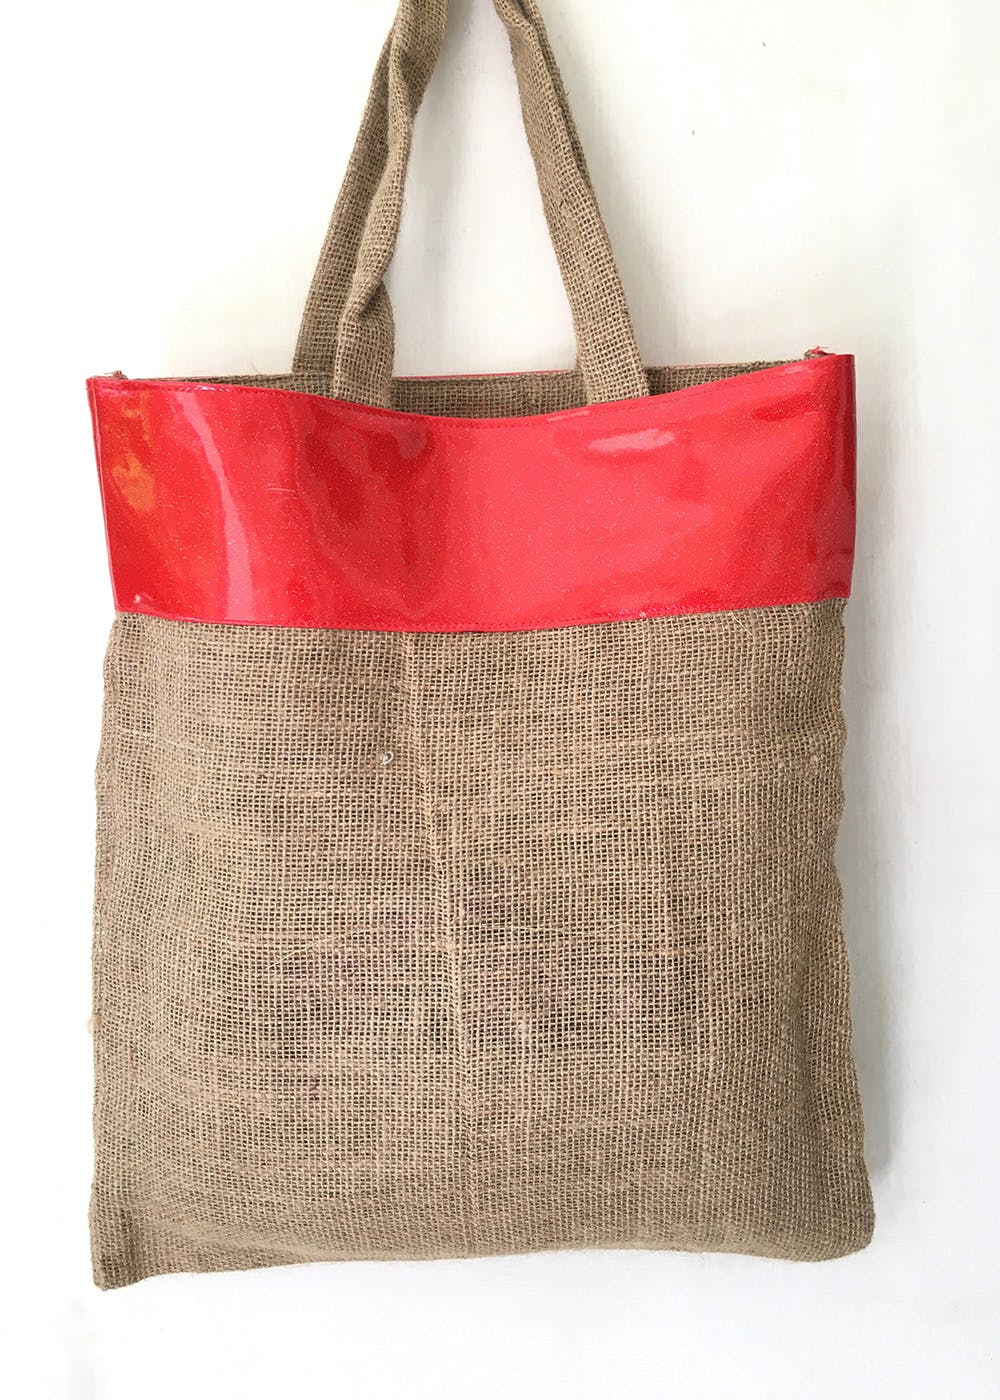 Get Perfect Red Jute Tote Bag at ₹ 750 | LBB Shop